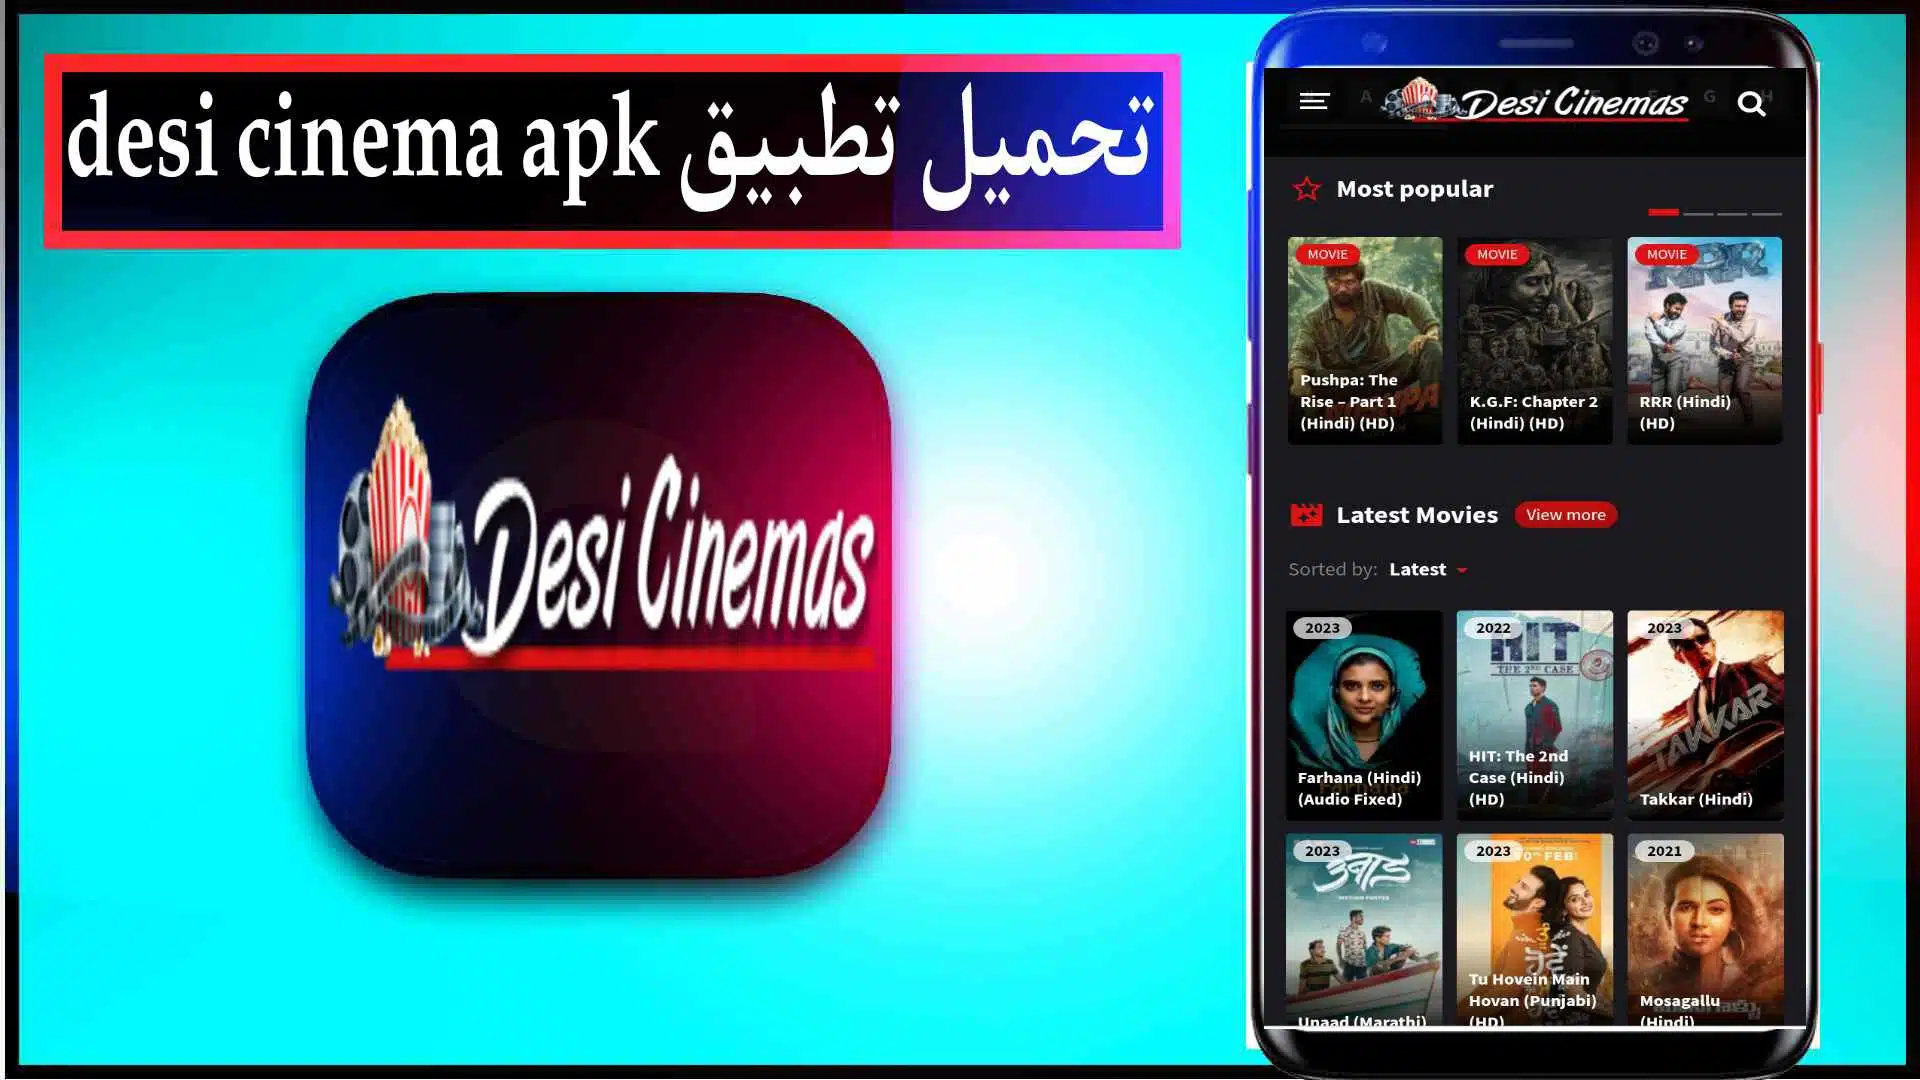 تحميل تطبيق desi cinema apk اخر اصدار للايفون وللاندرويد 2023 2